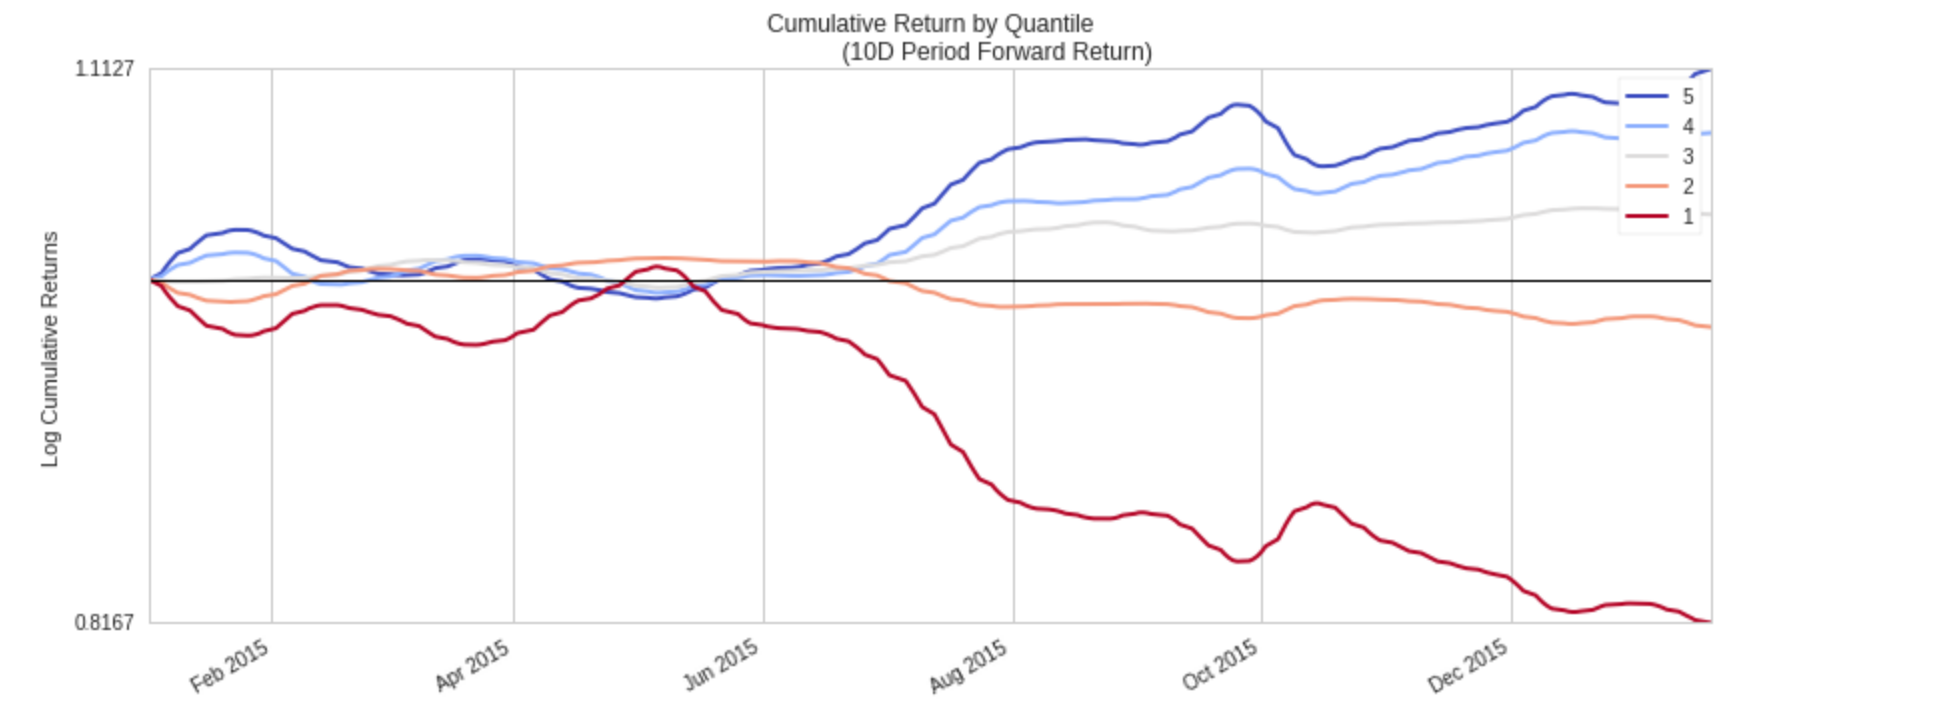 Cumulative returns by quantile for Momentum